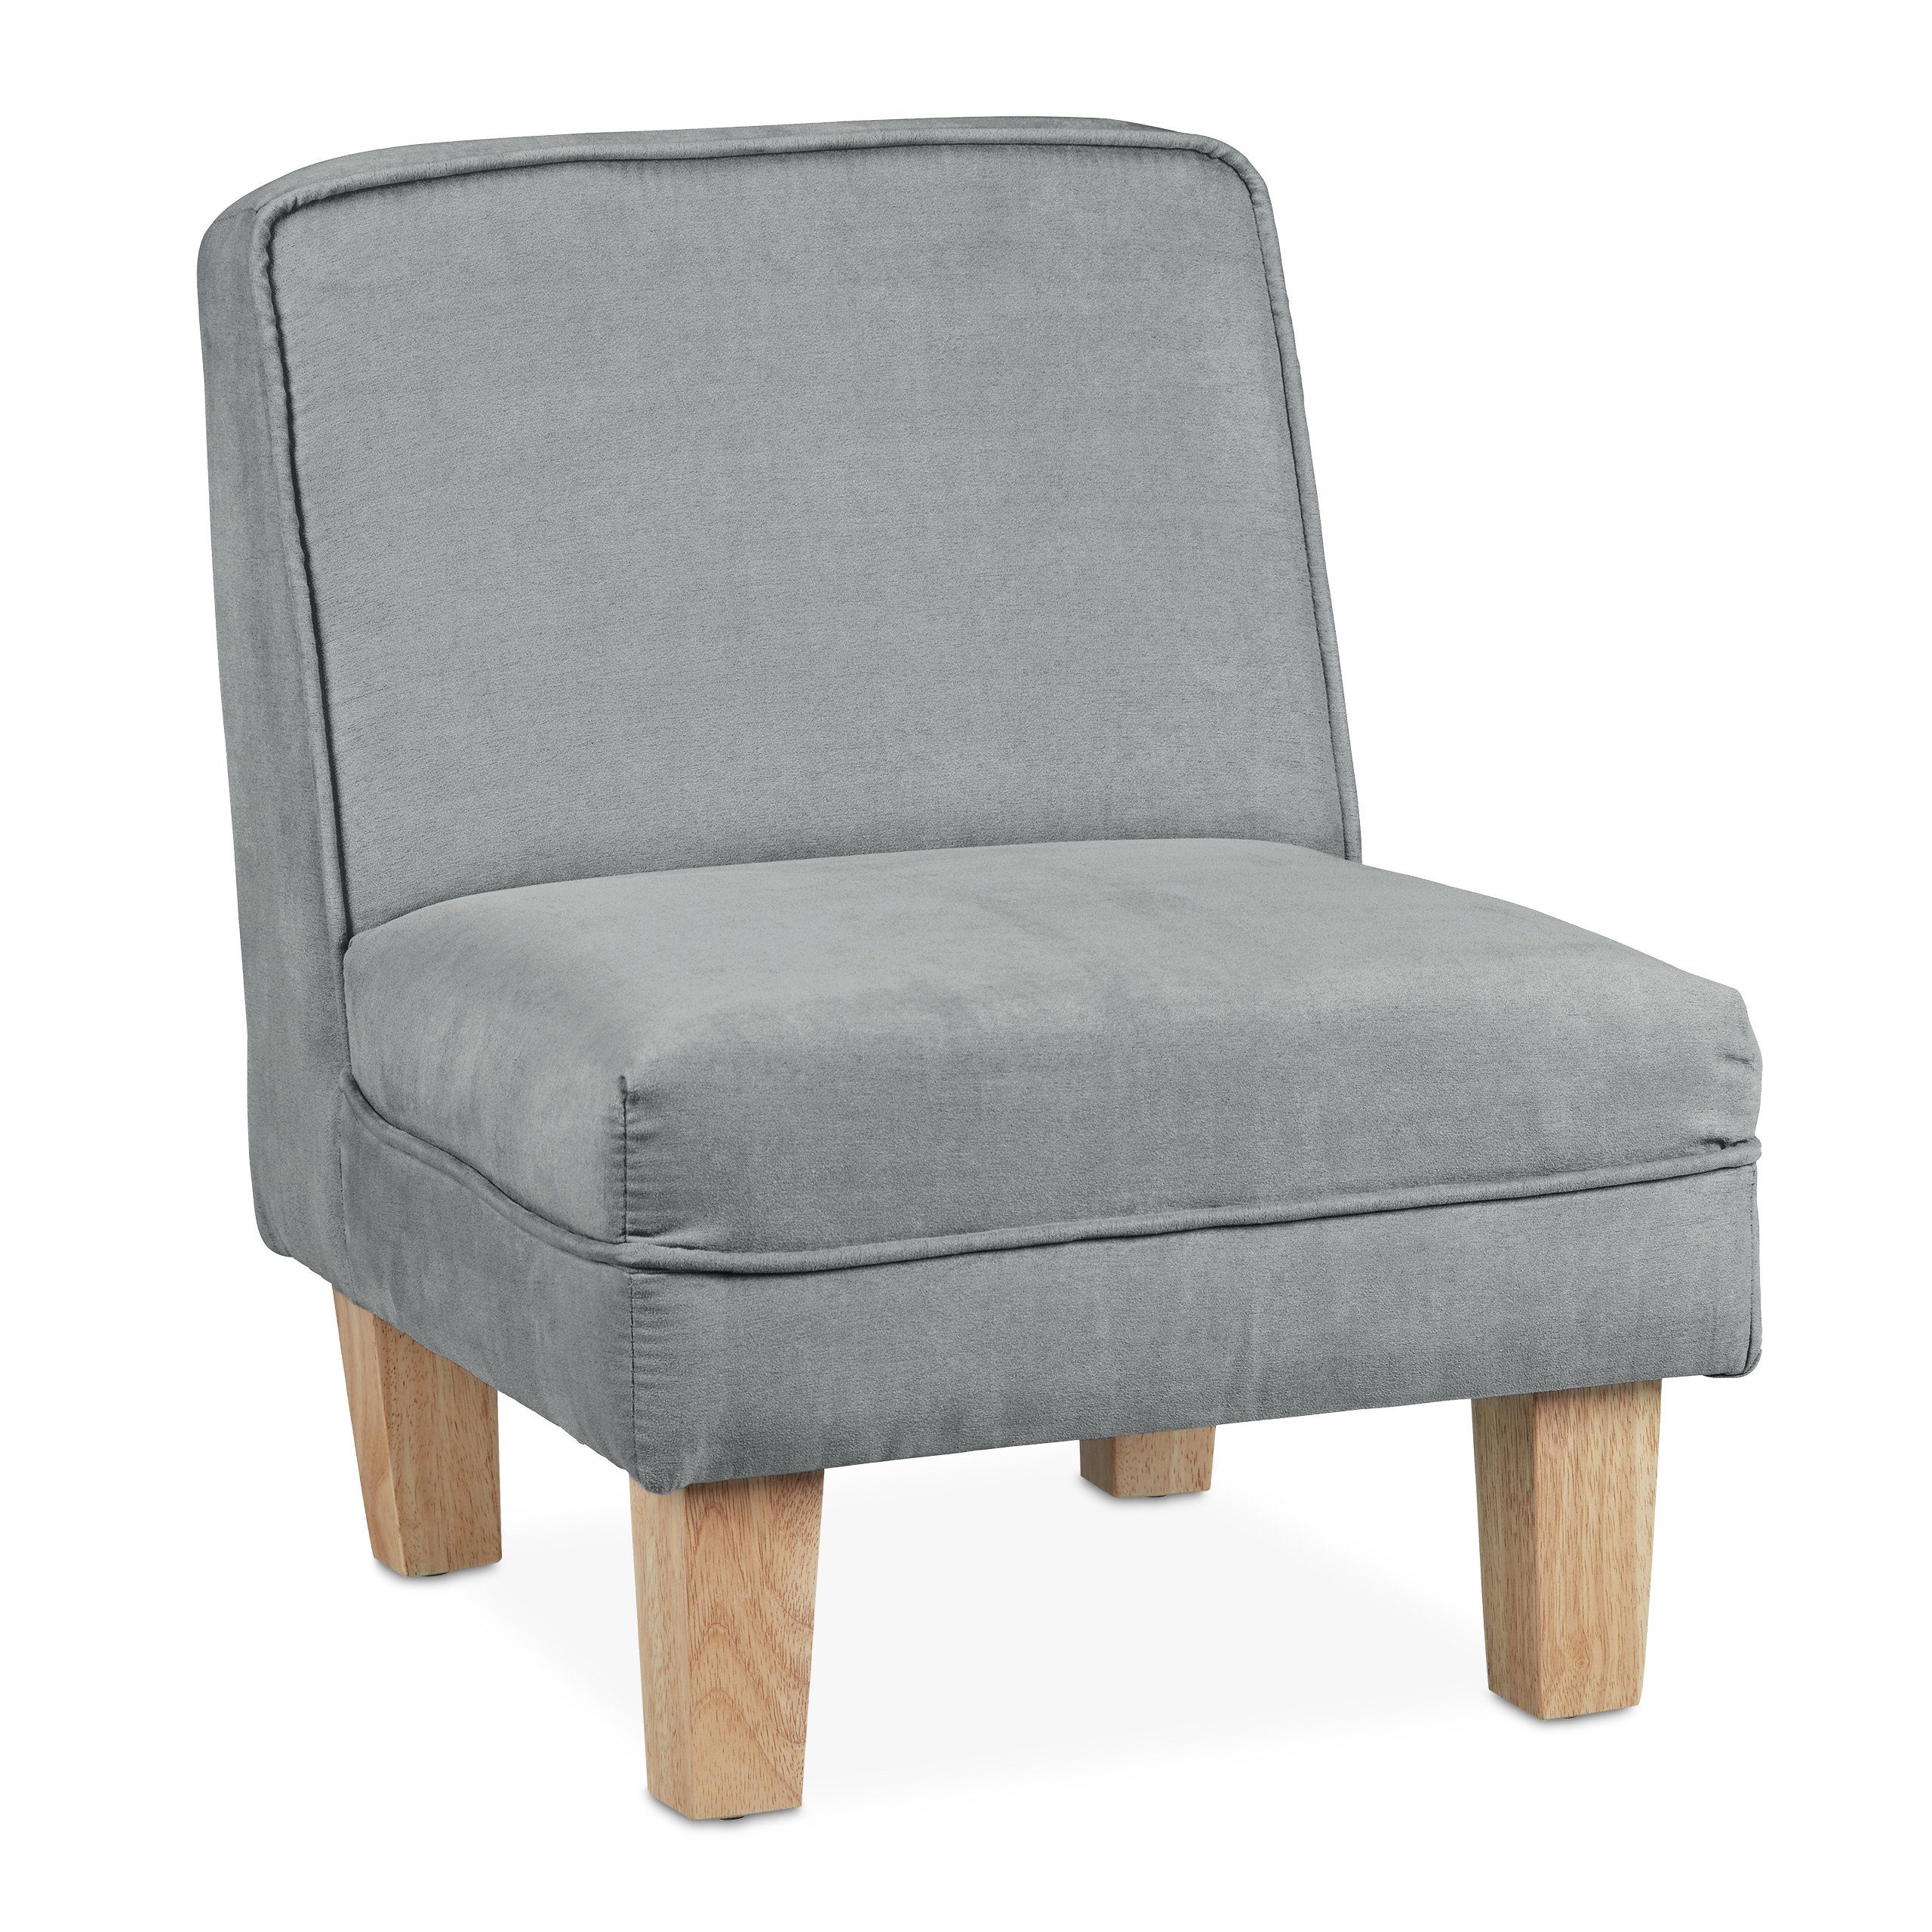 Grau mit Hellbraun Grau Holzfüßen, Kindersessel Sessel relaxdays